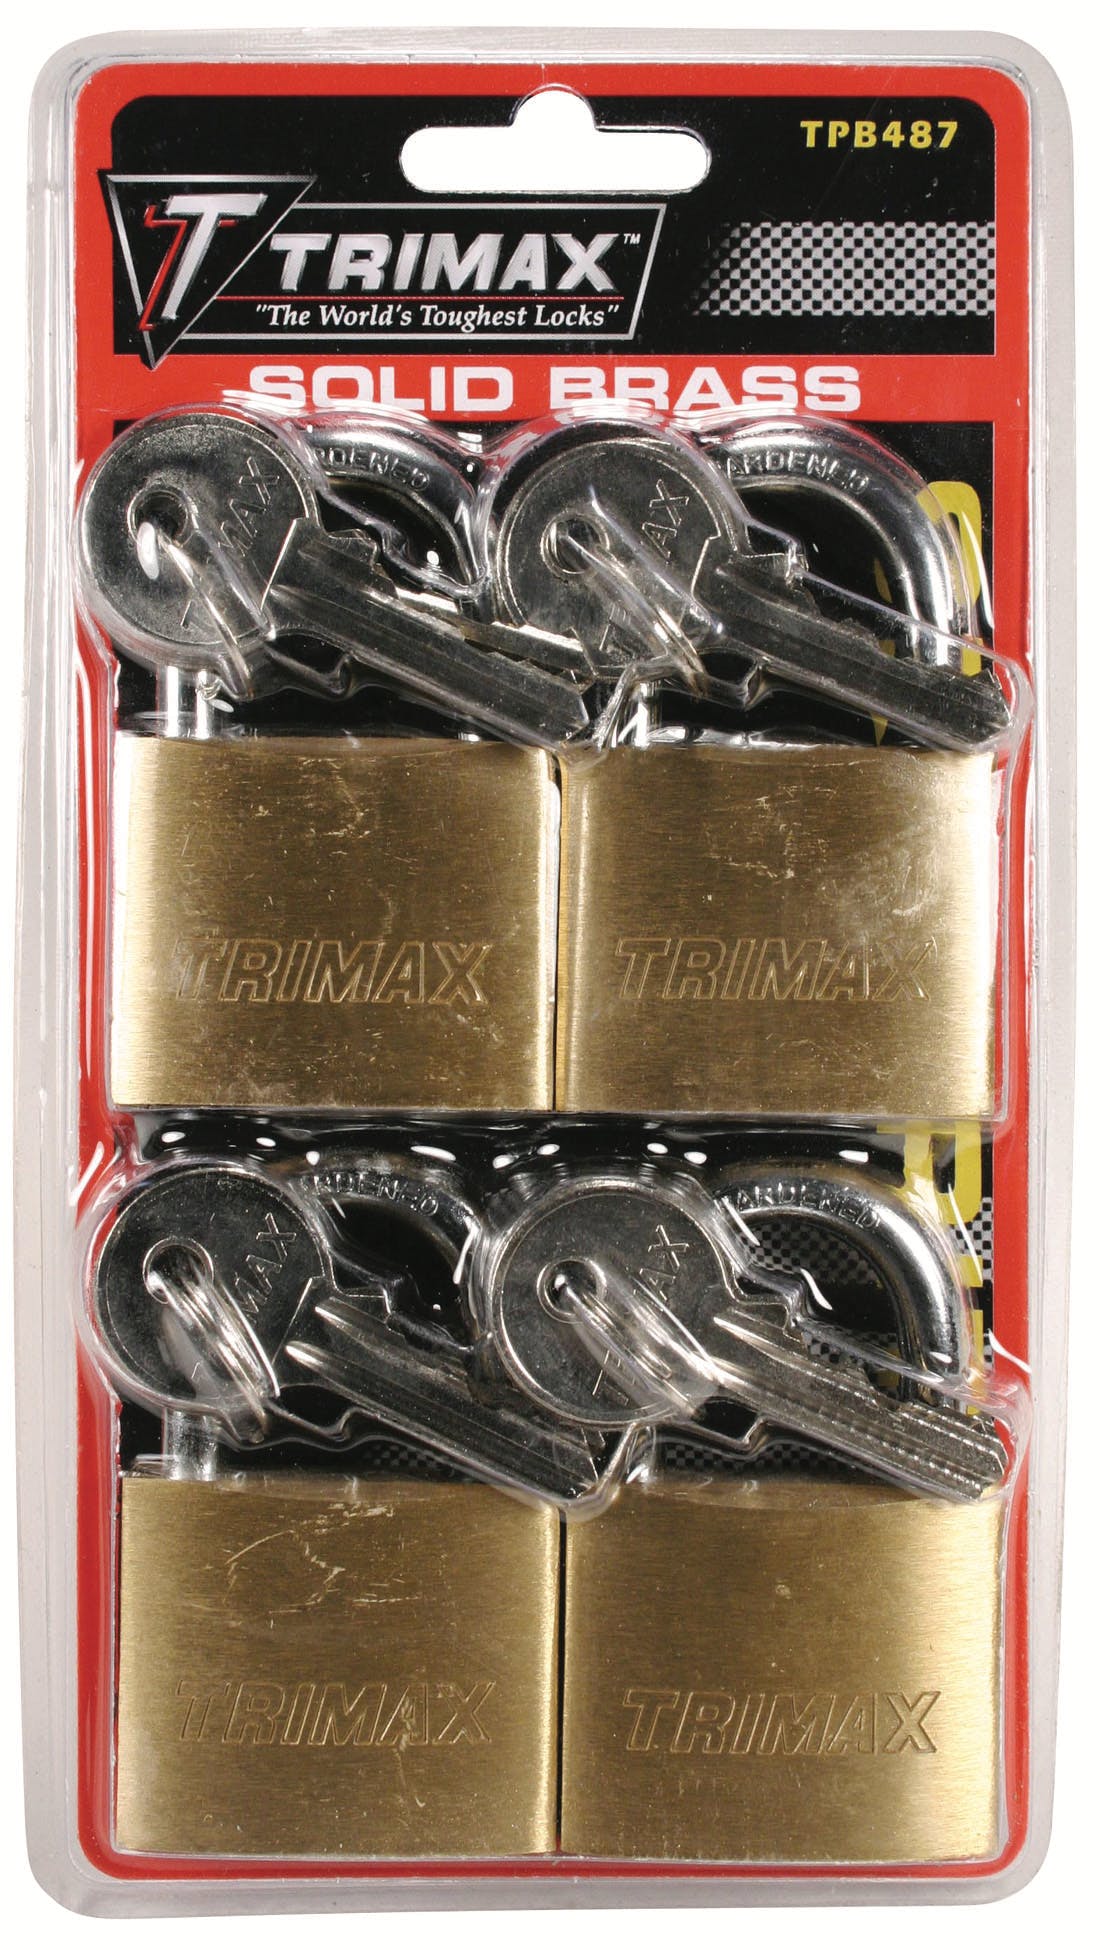 TRIMAX TPB487 4 Pack Keyed-Alike Tpb87 Rugged Dual Locking Solid Brass